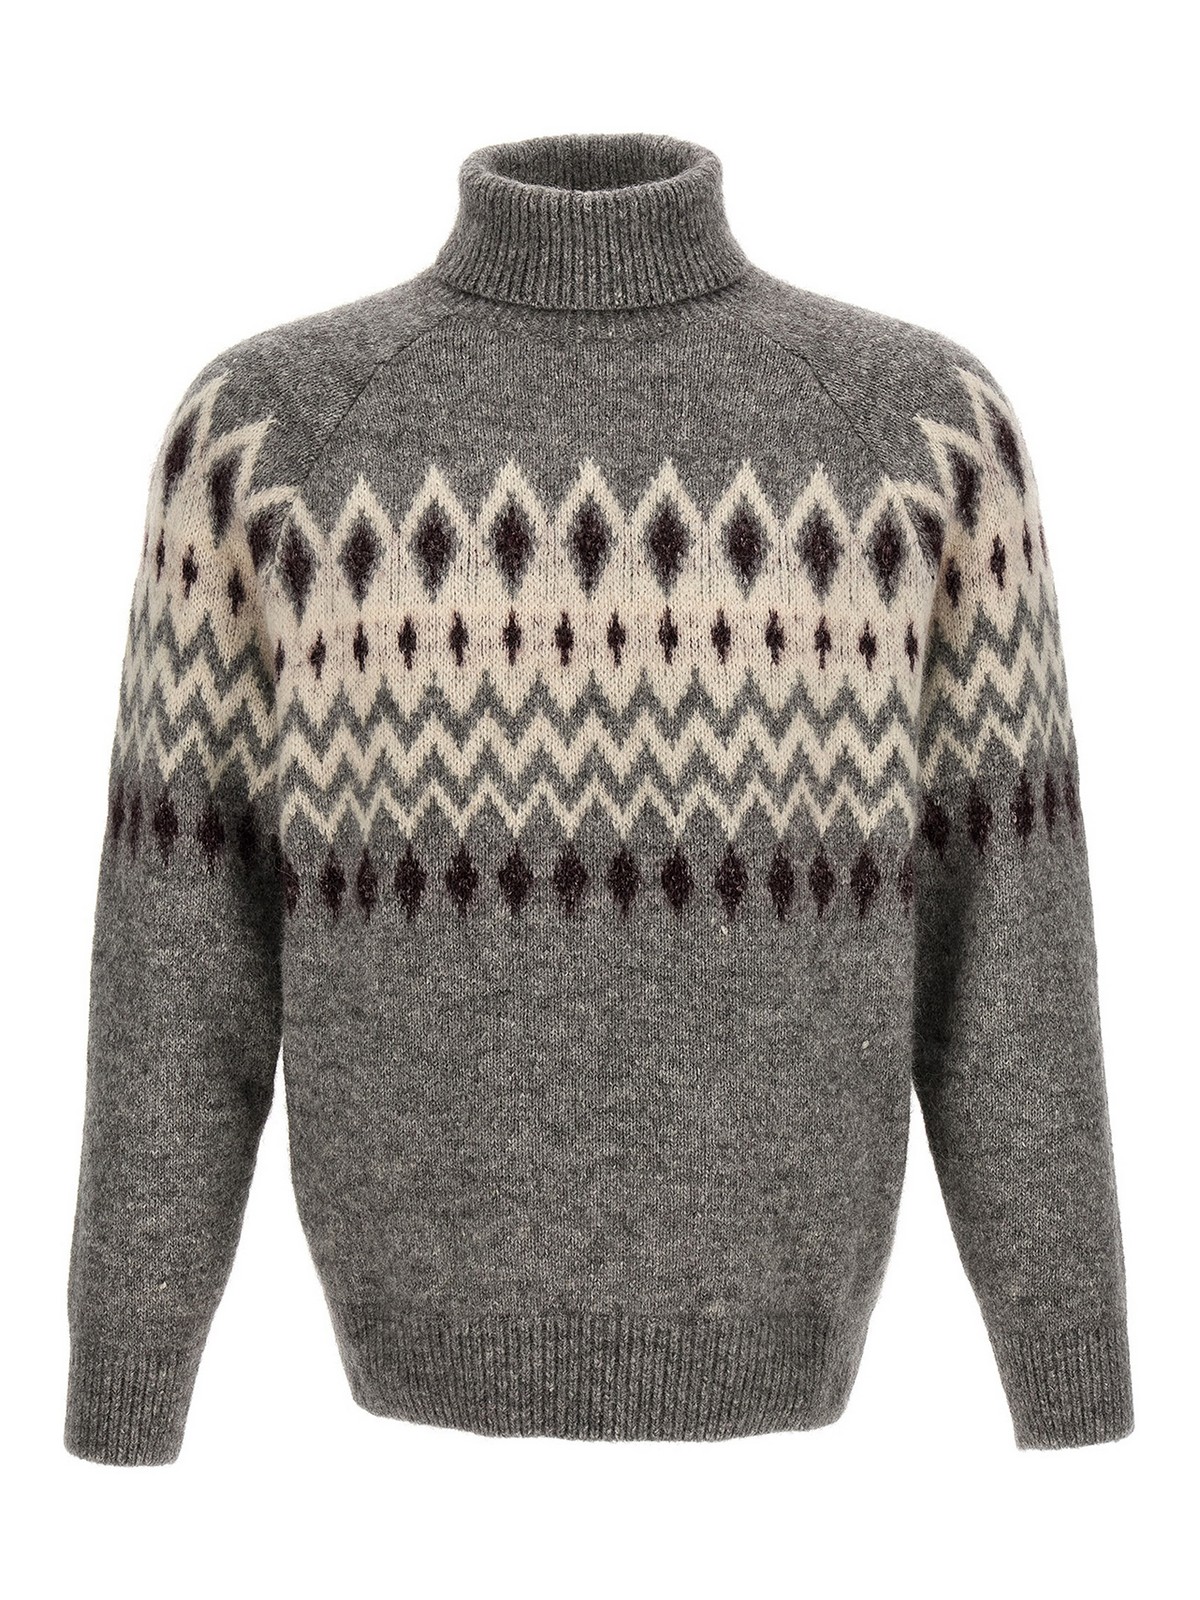 Brunello Cucinelli Jacquard Patterned Sweater In Grey